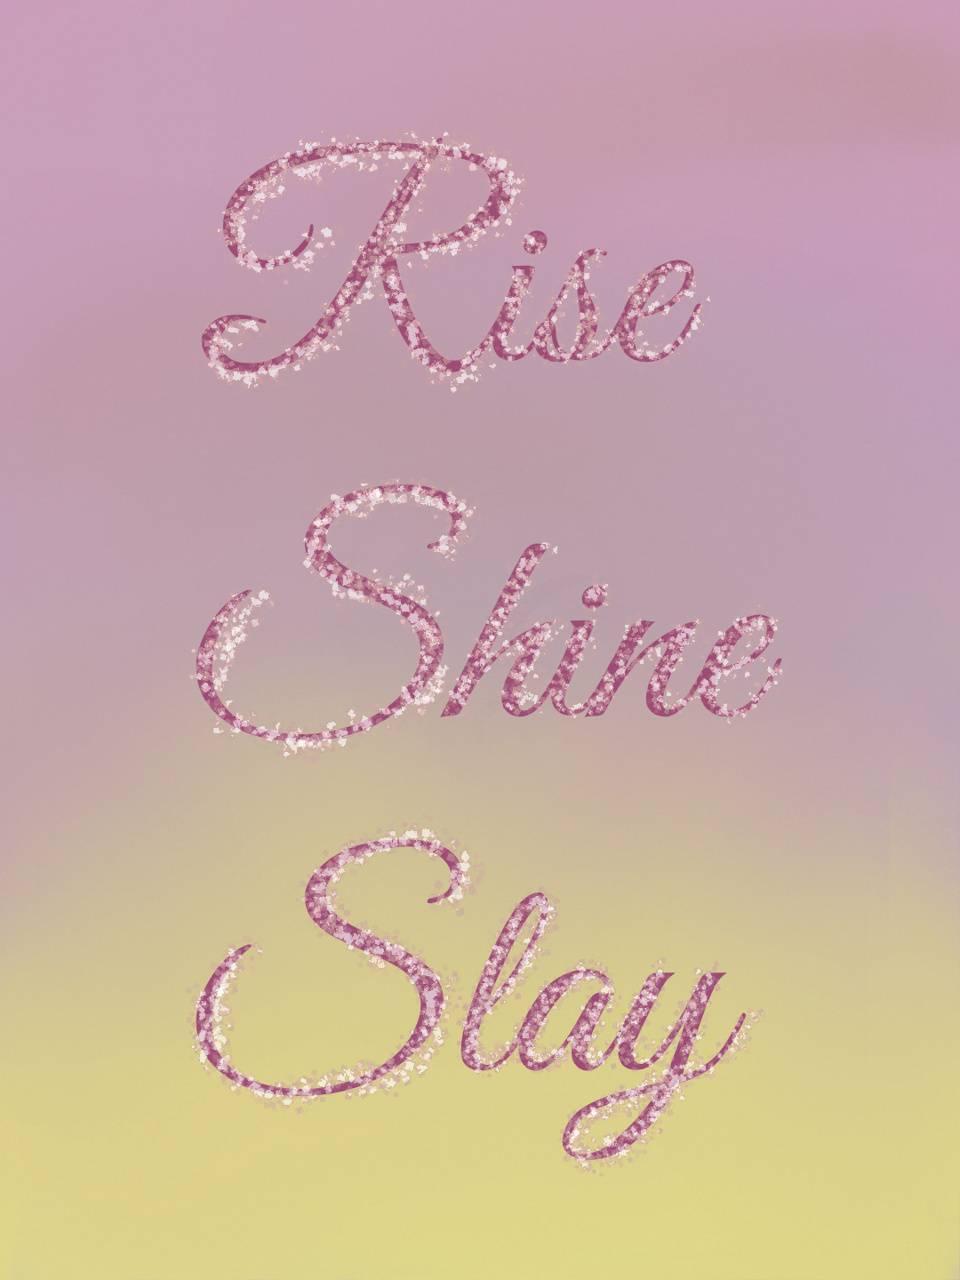 Rise Shine Slay wallpaper